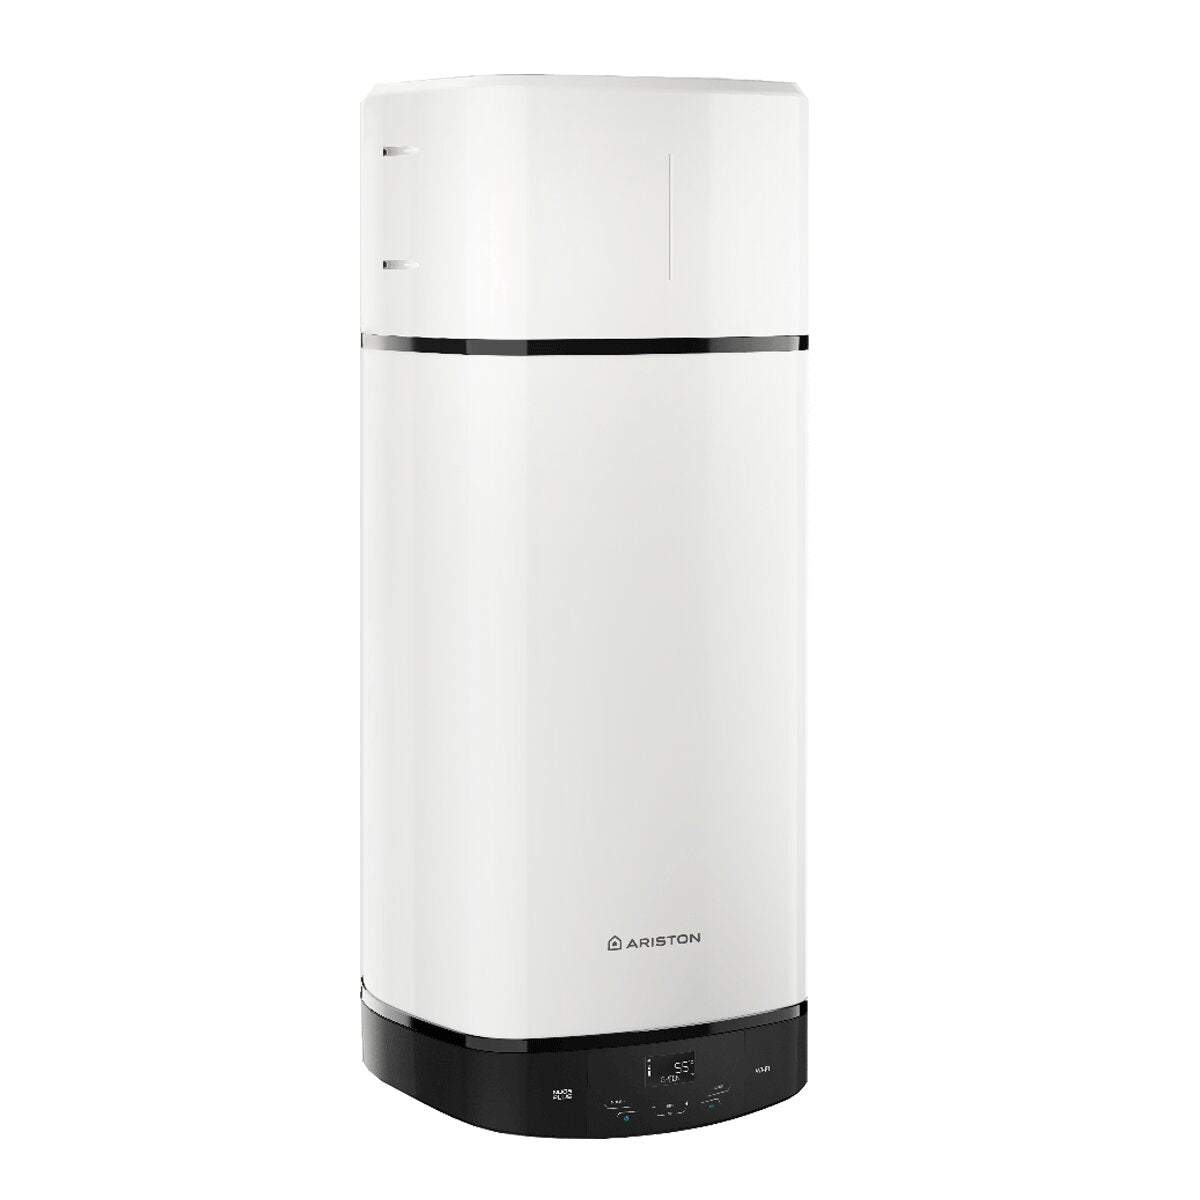 Ariston Nuos Plus R290 S2 WiFi A+ 80 Liter Wärmepumpen-Warmwasserbereiter